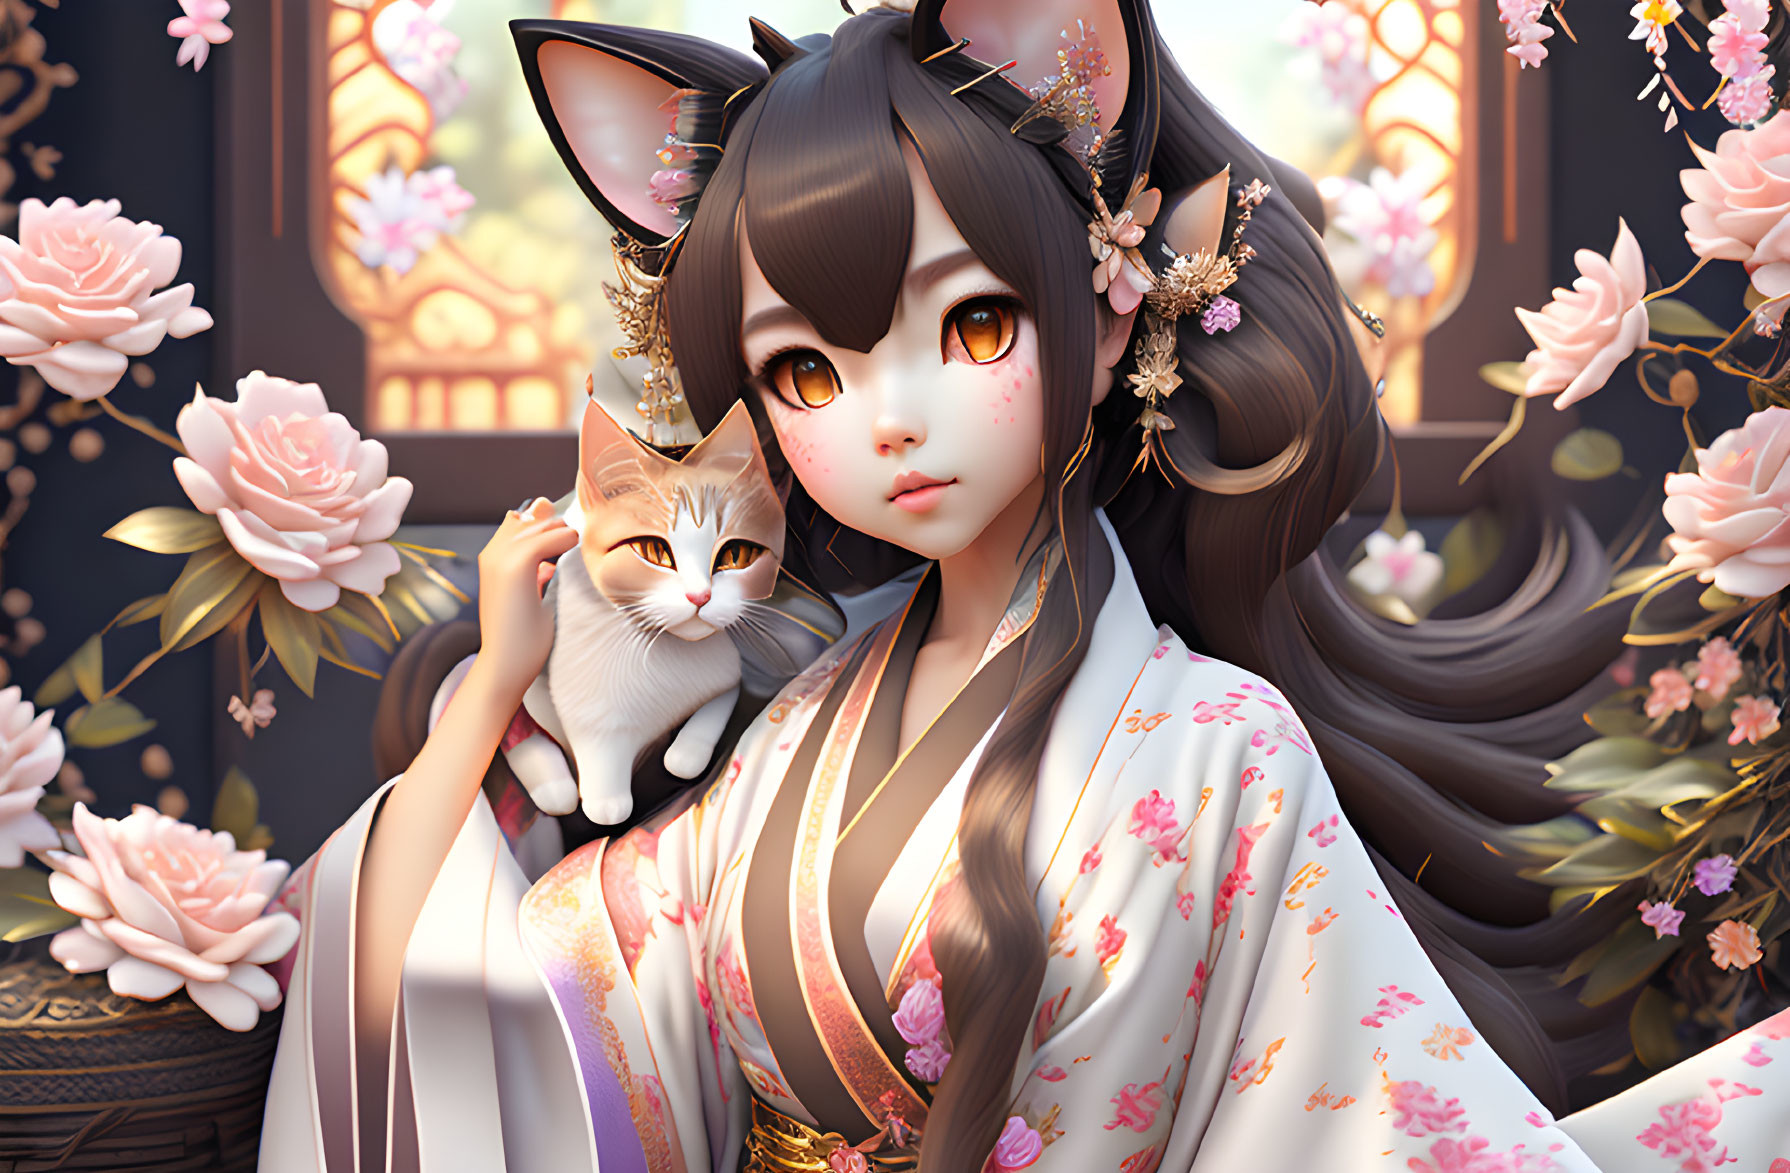 Neko Princess in Kimono